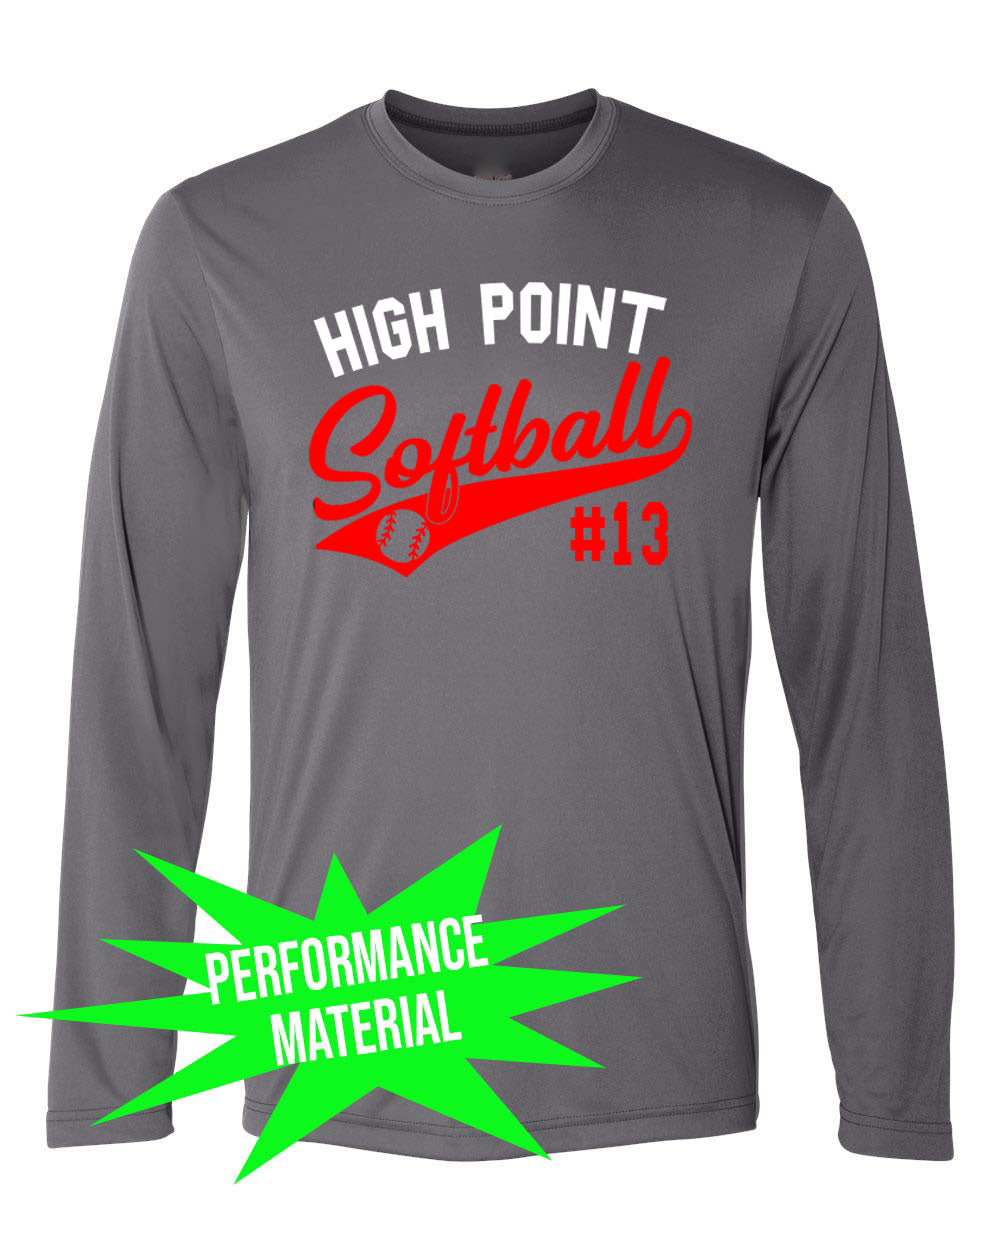 High Point Softball Performance Material Design 2 Long Sleeve Shirt